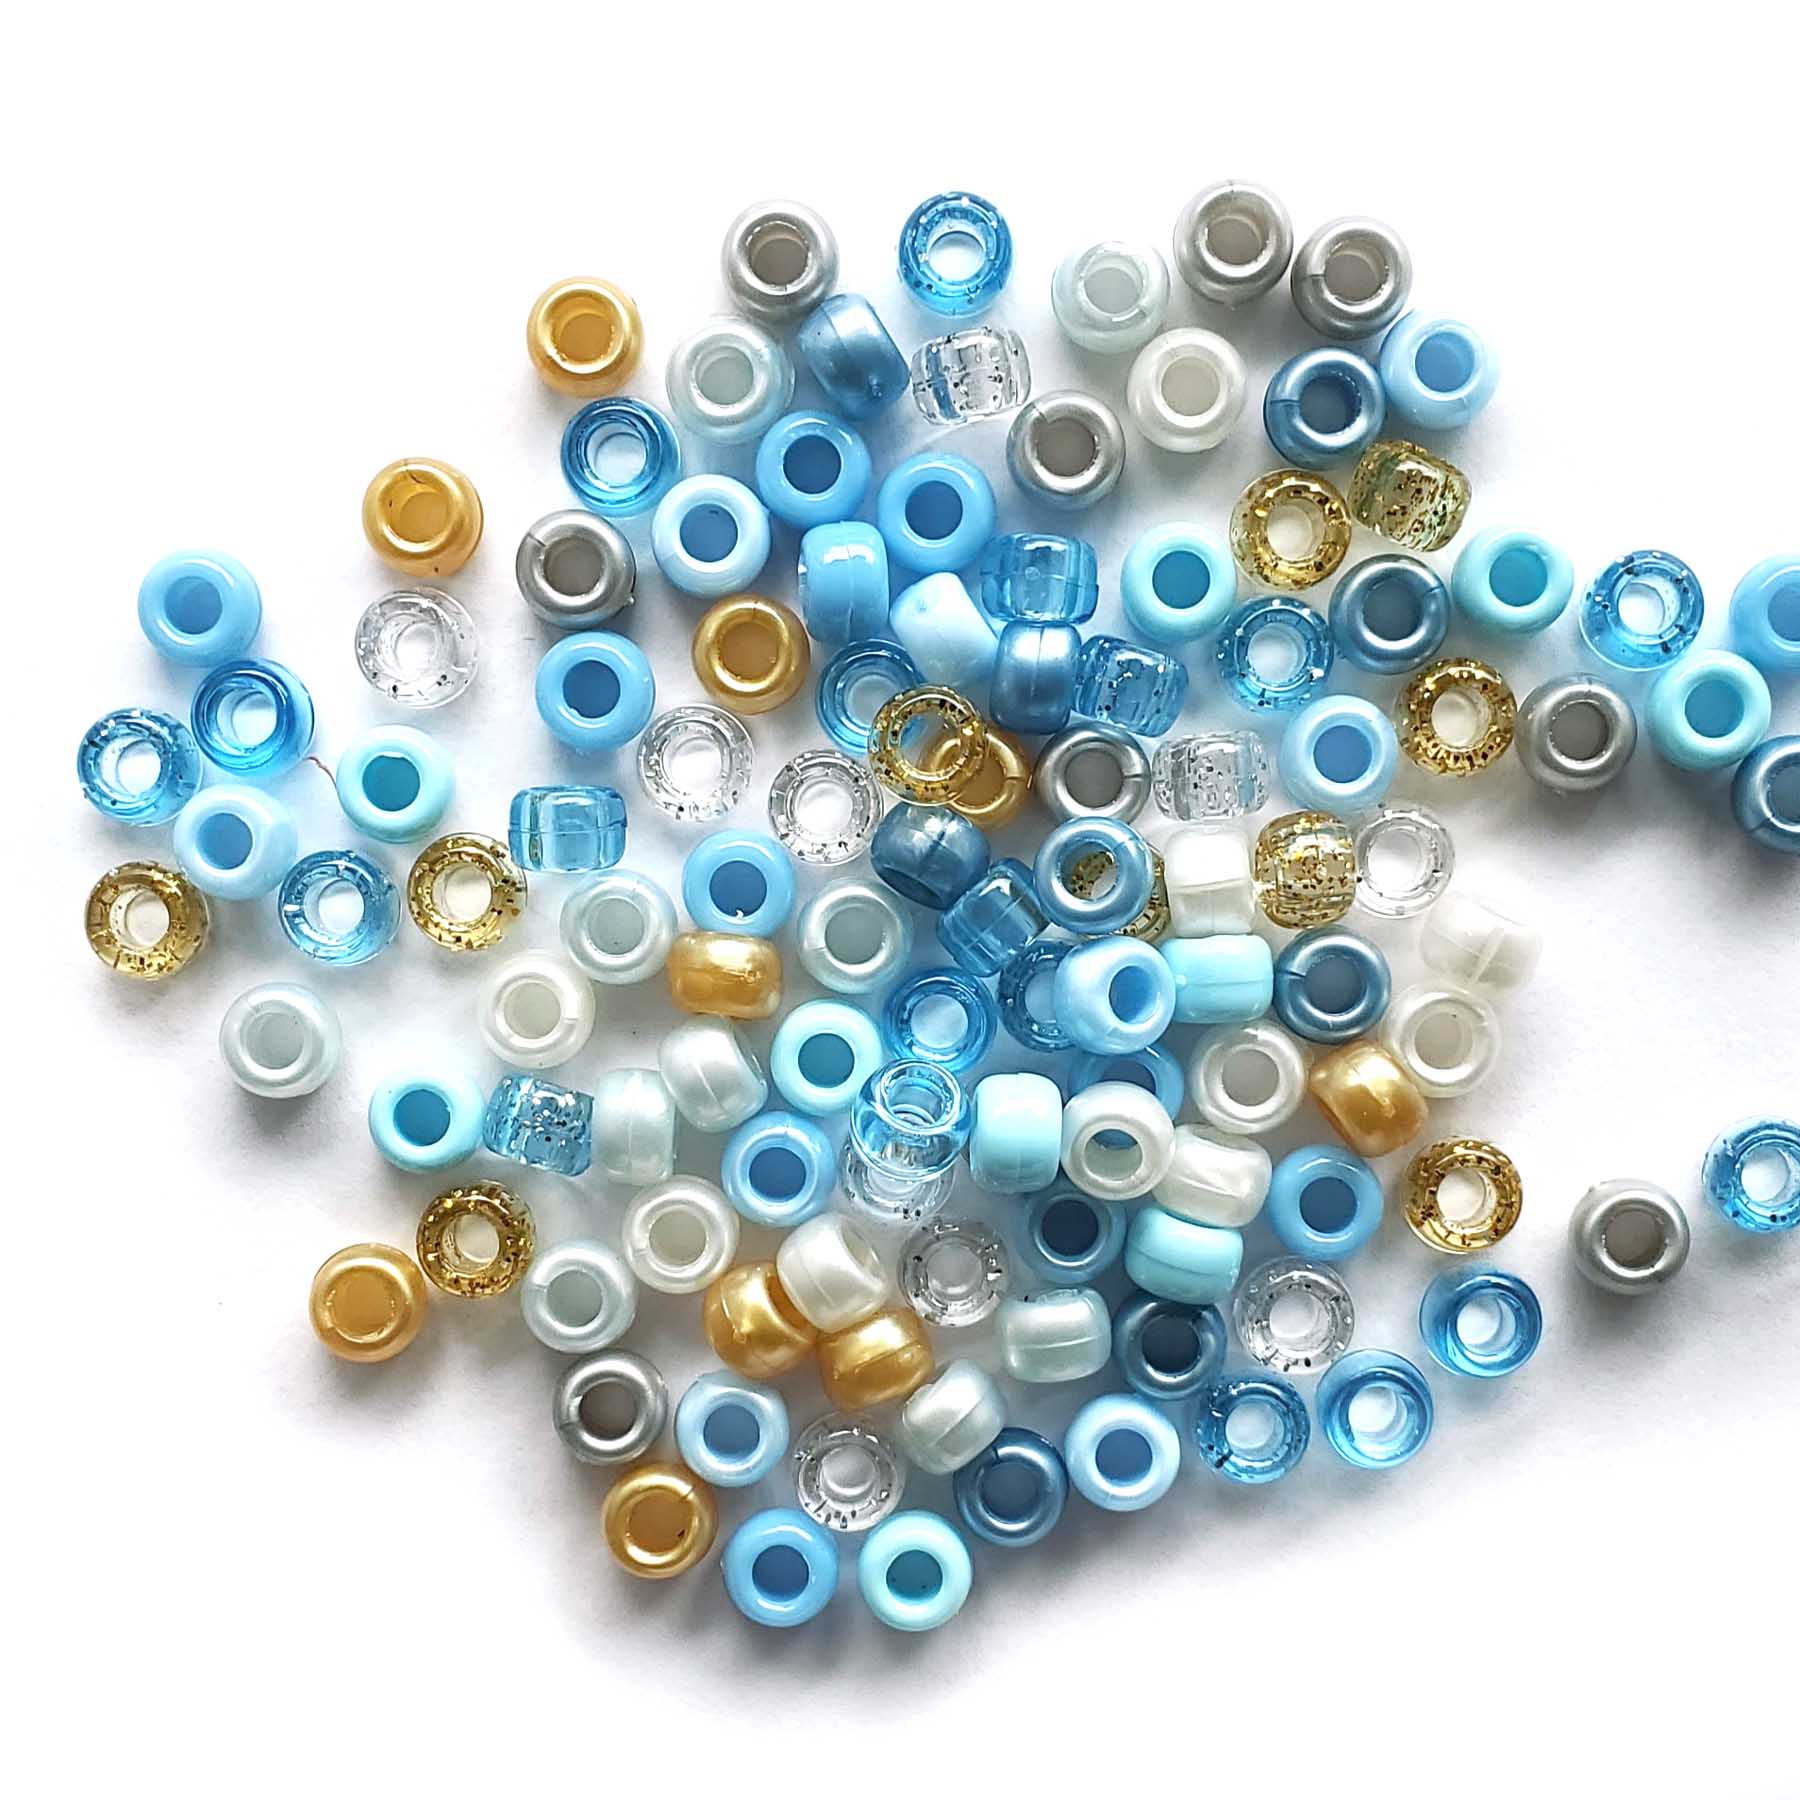 Princess Lihgt Blue Mix Plastic Pony Beads 6 x 9mm, 500 beads